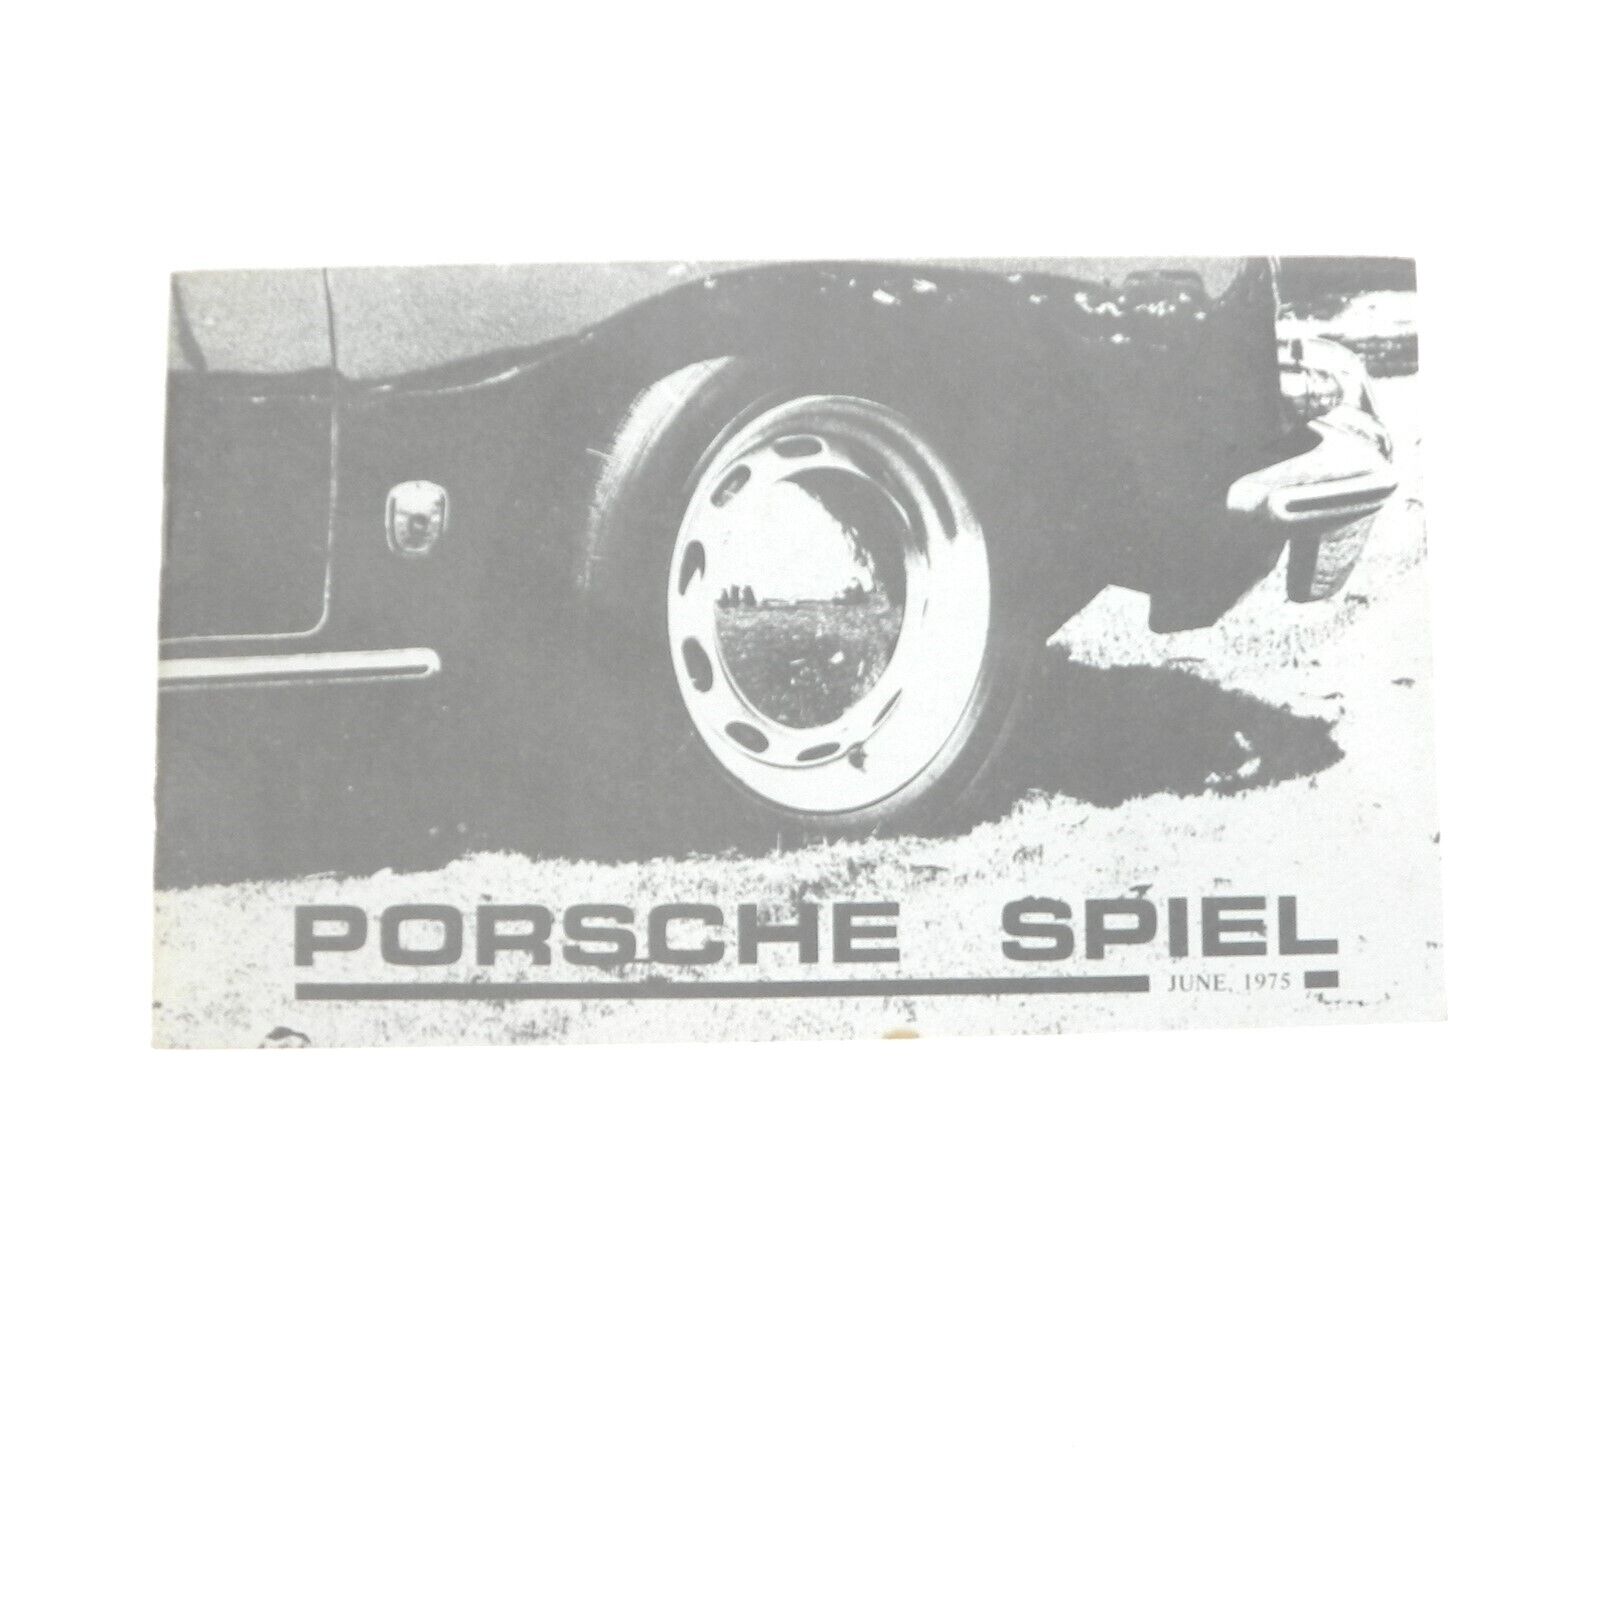 VTG JUNE 1975 PORCHE SPIEL CAR CLUB OF AMERICA NEWSLETTER NEWS REPAIRS SERVICE